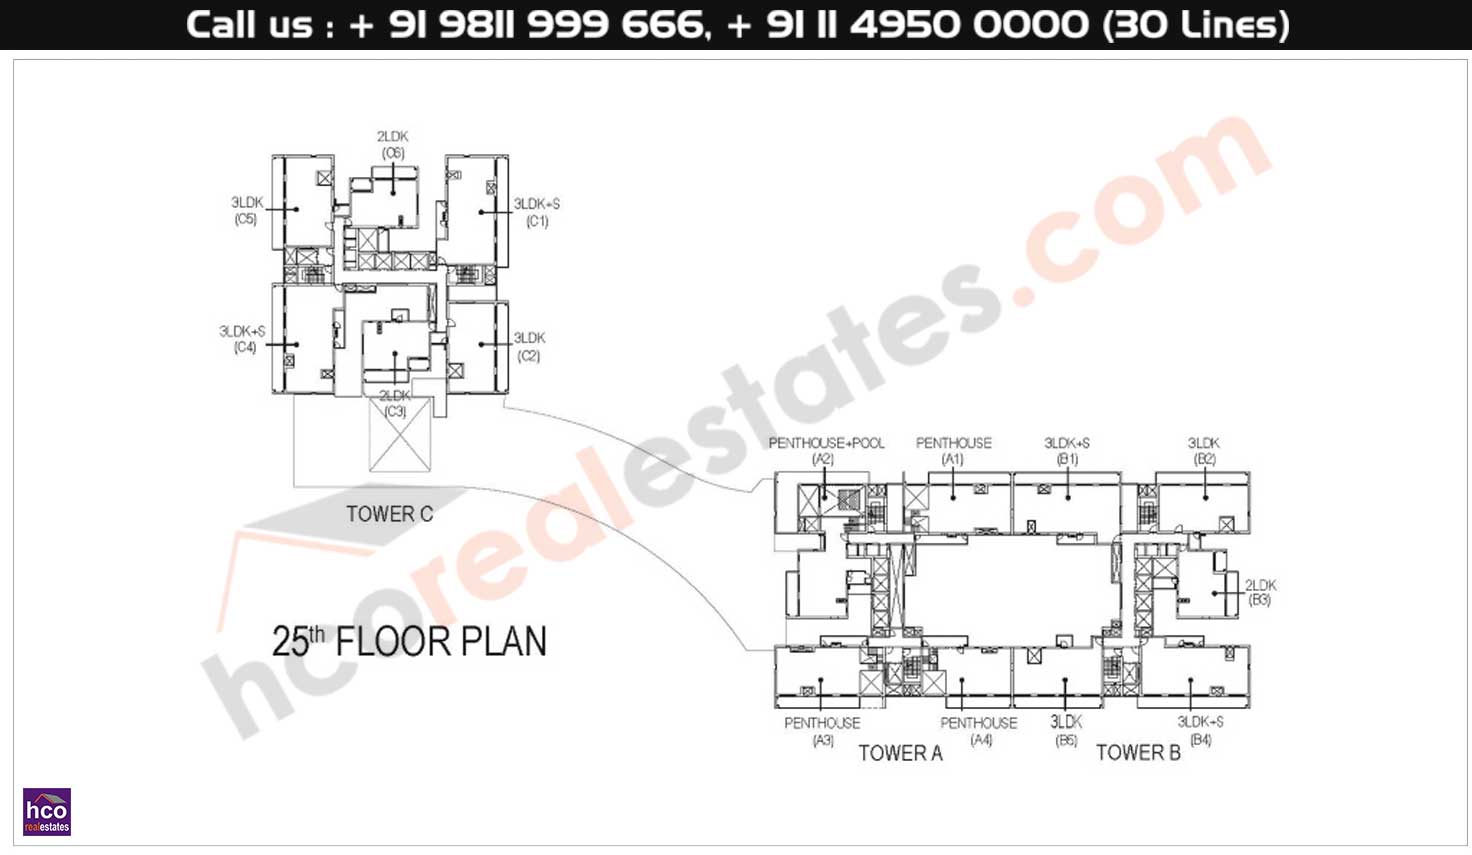 25th Floor Plan